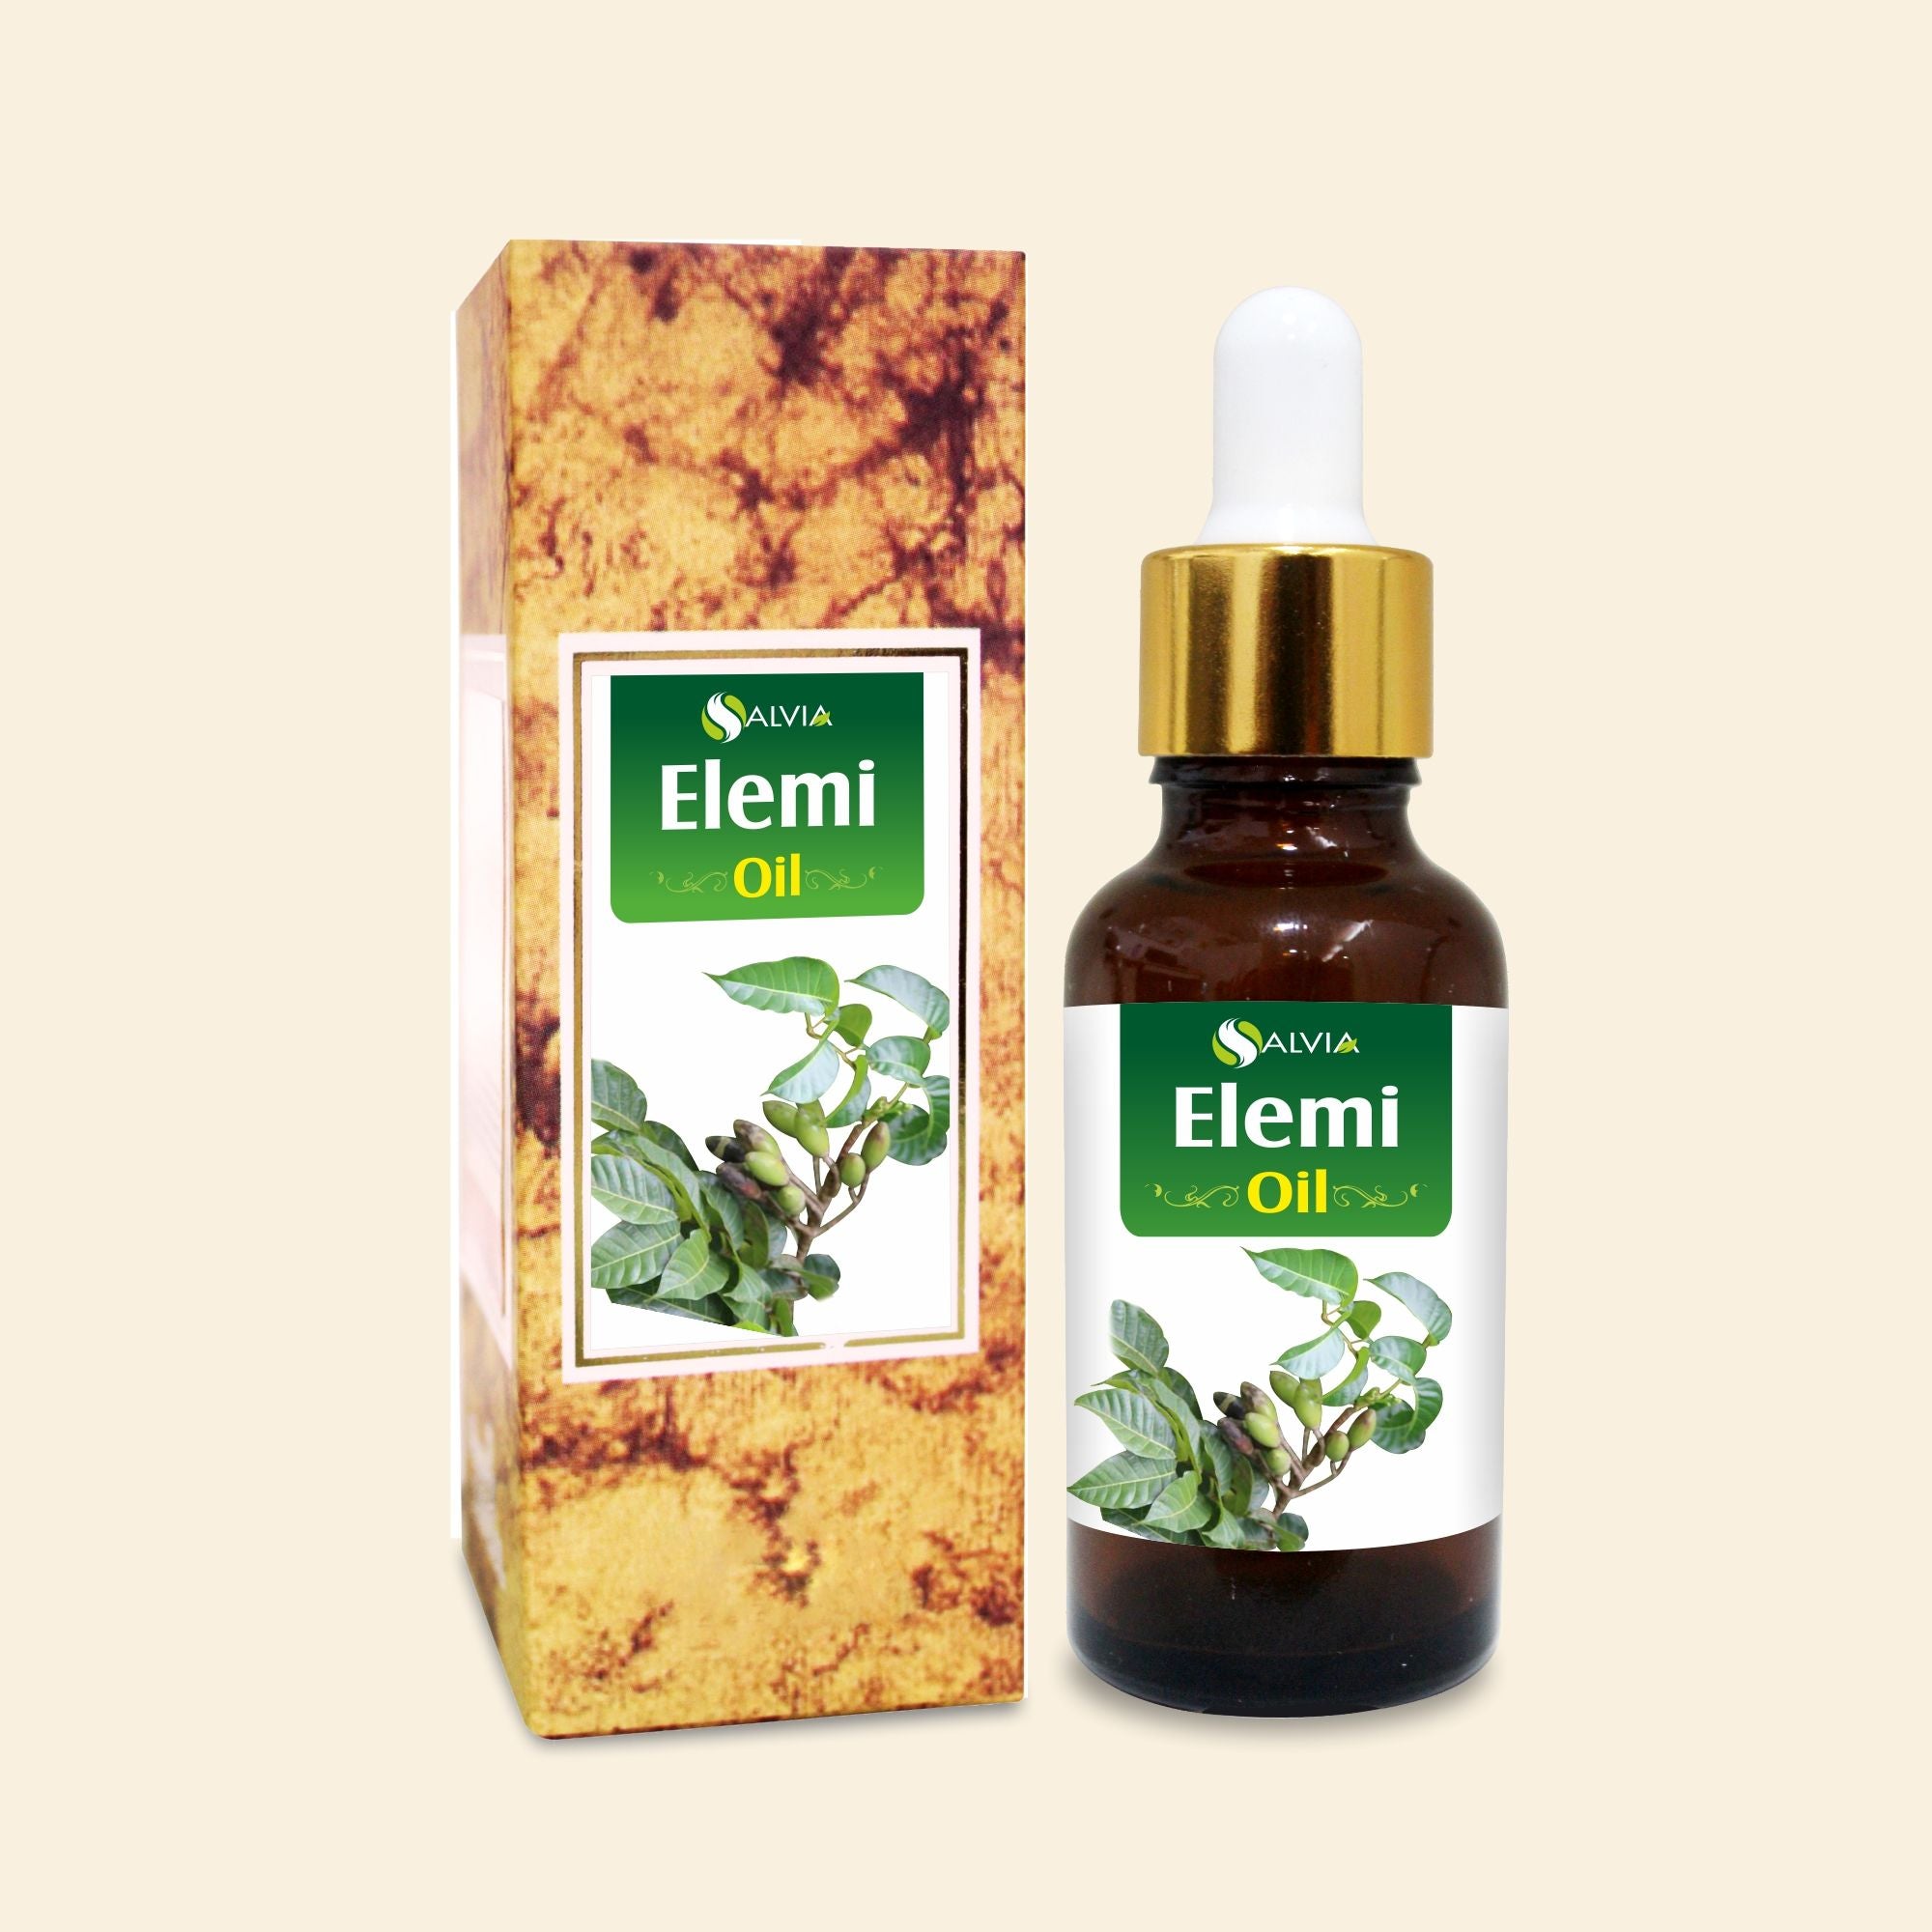 Salvia Infused Oils Elemi Oil (Canarium Vulgare) 100% Pure Natural Essential Oil